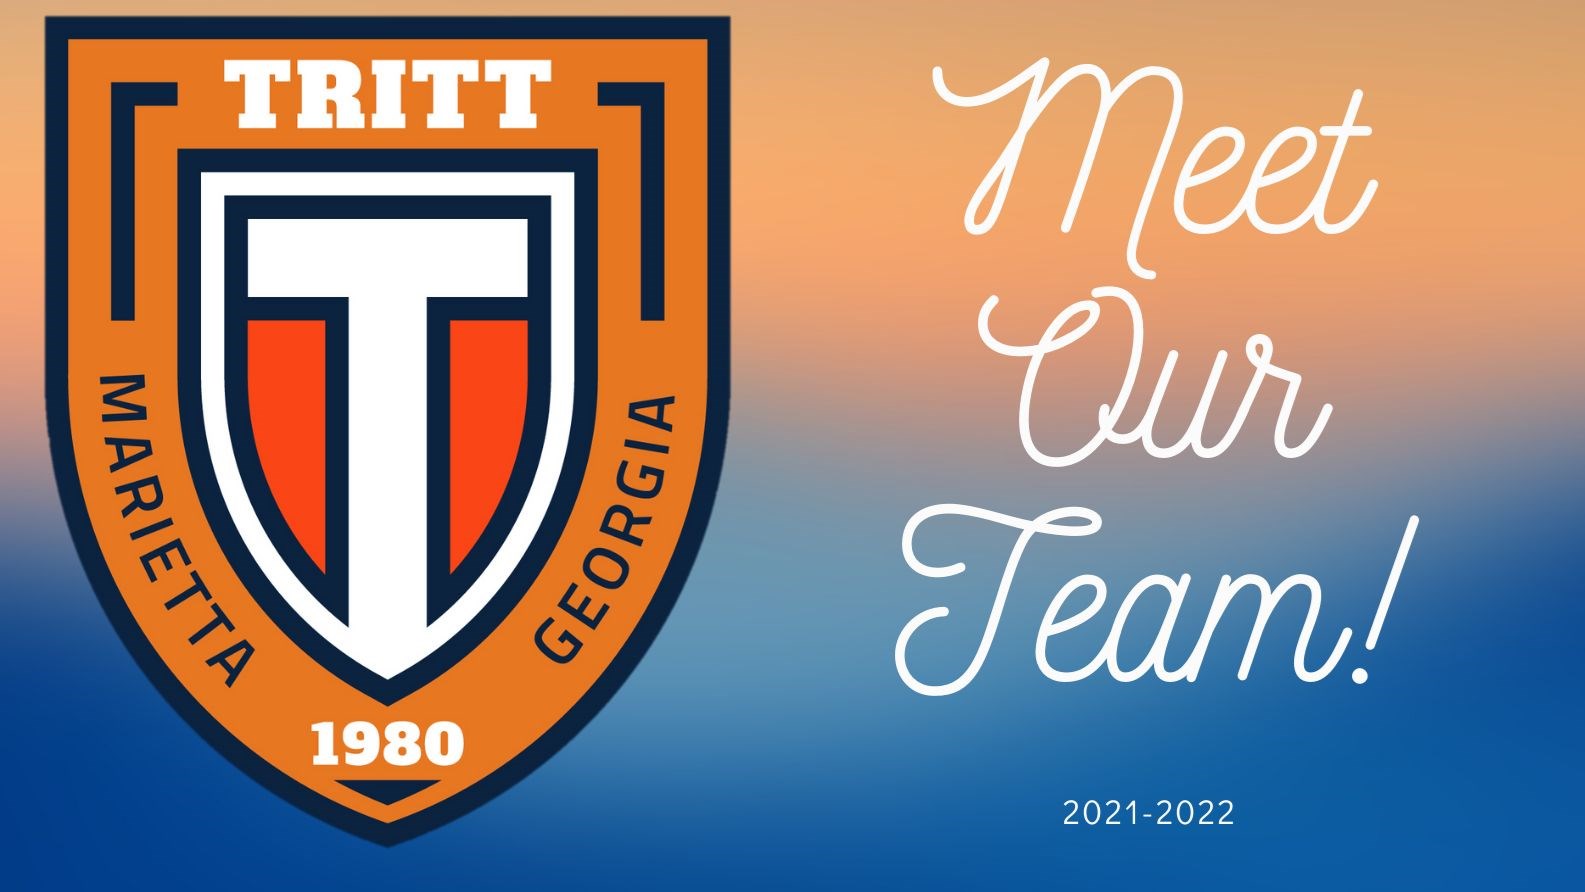 Meet our Tritt team members